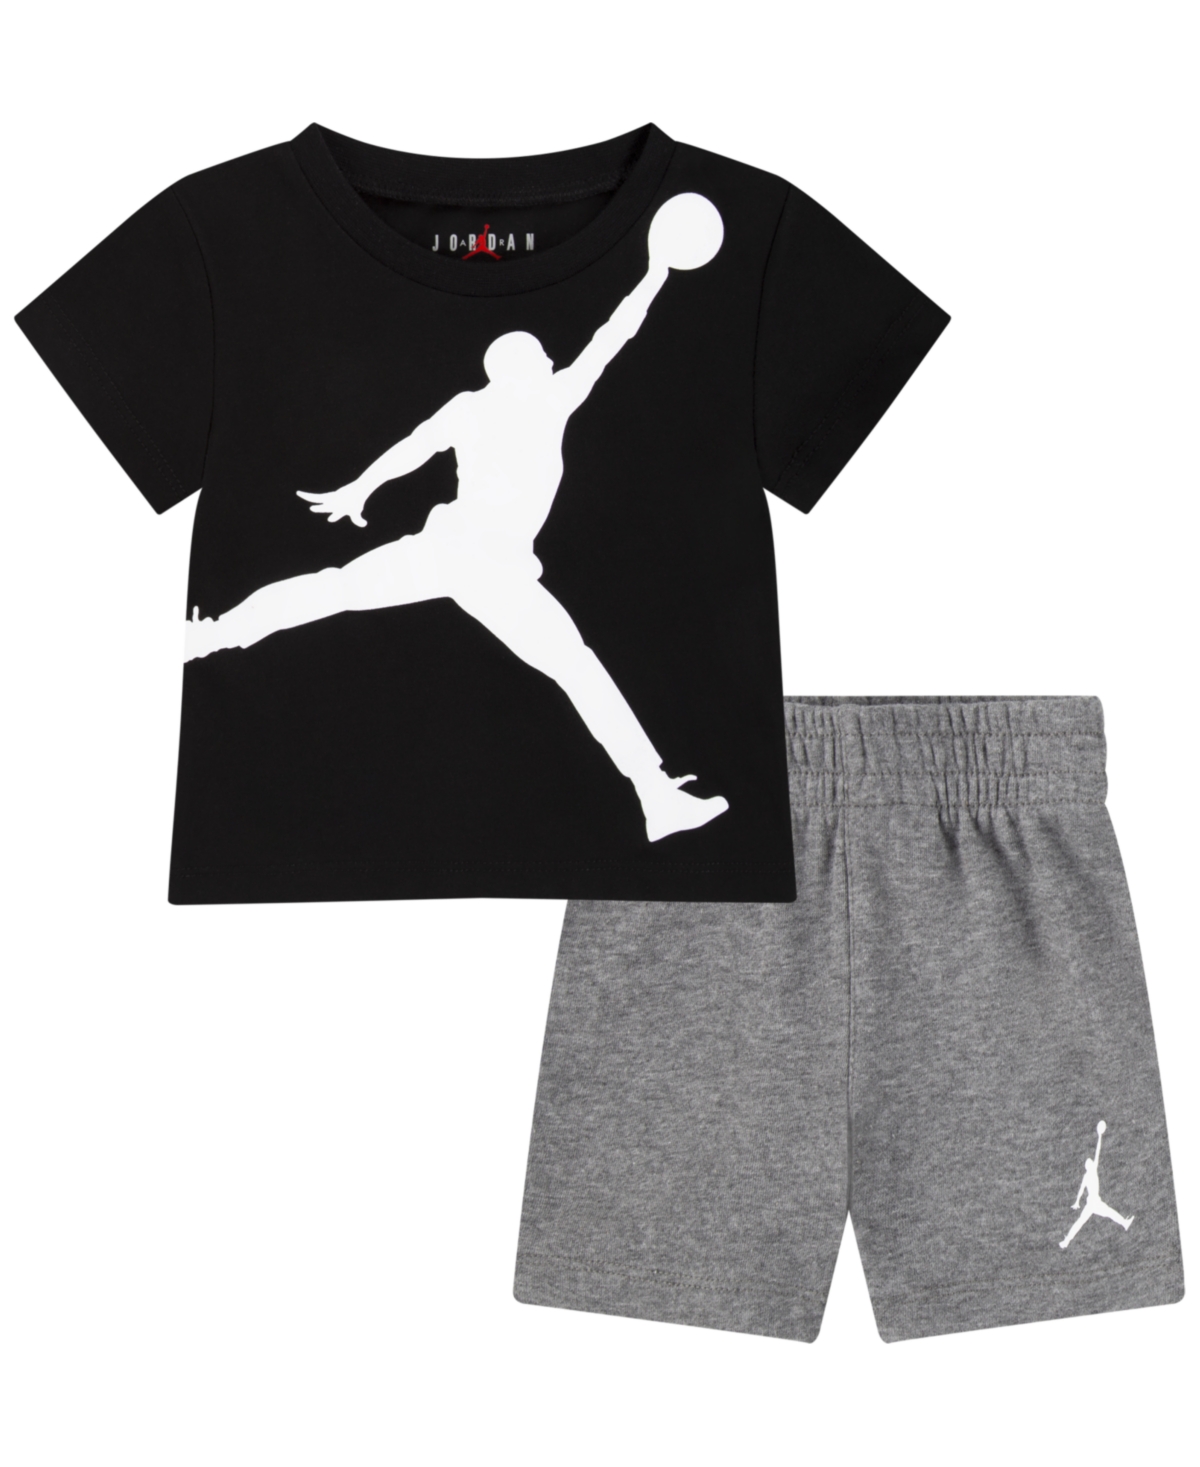 Jordan Baby Boys Jumbo Jump Man T Shirt And Shorts, 2 Piece Set In Carbon Heather